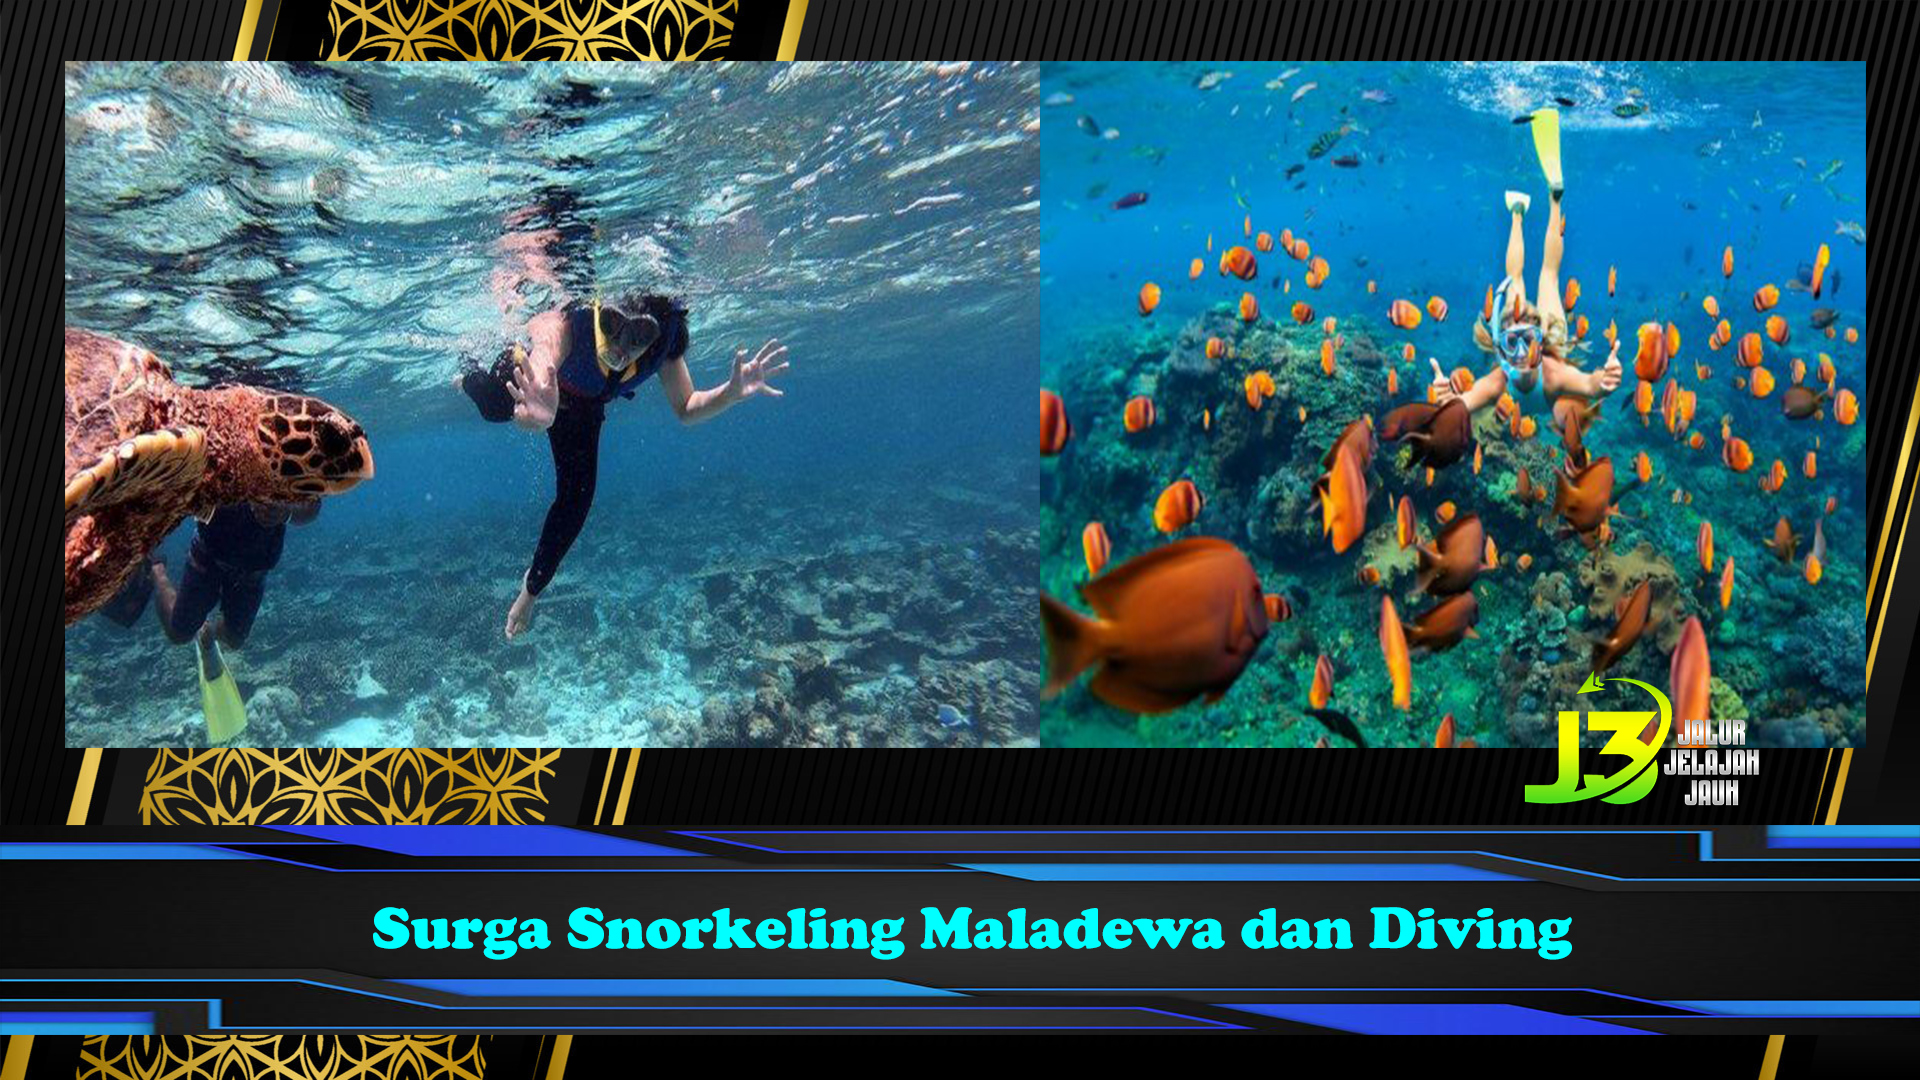 Surga Snorkeling Maladewa dan Diving